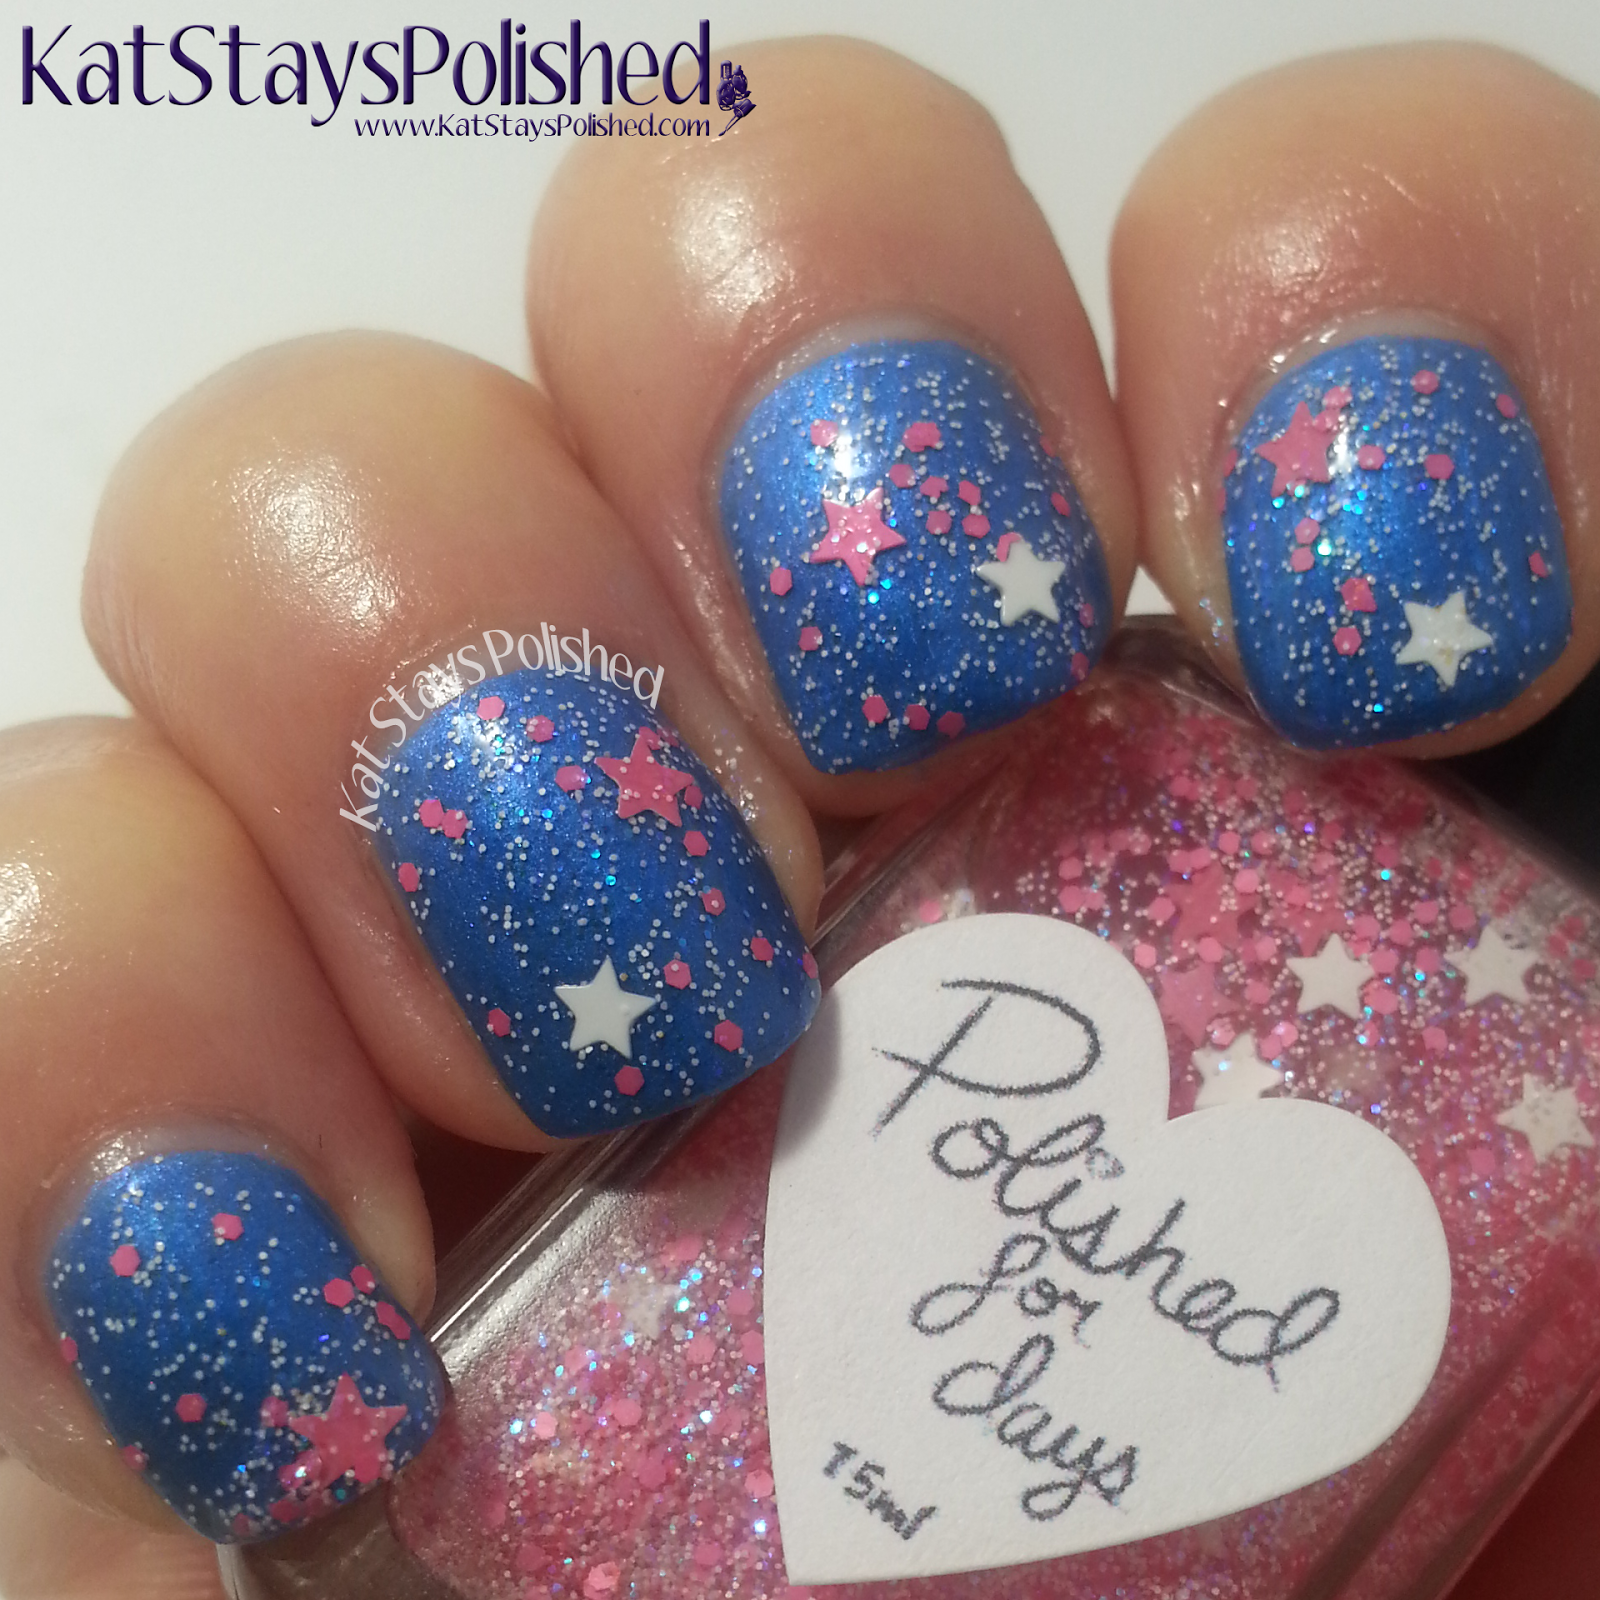 Polished for For Days - Gloss48 - Stargazing | Kat Stays Polished